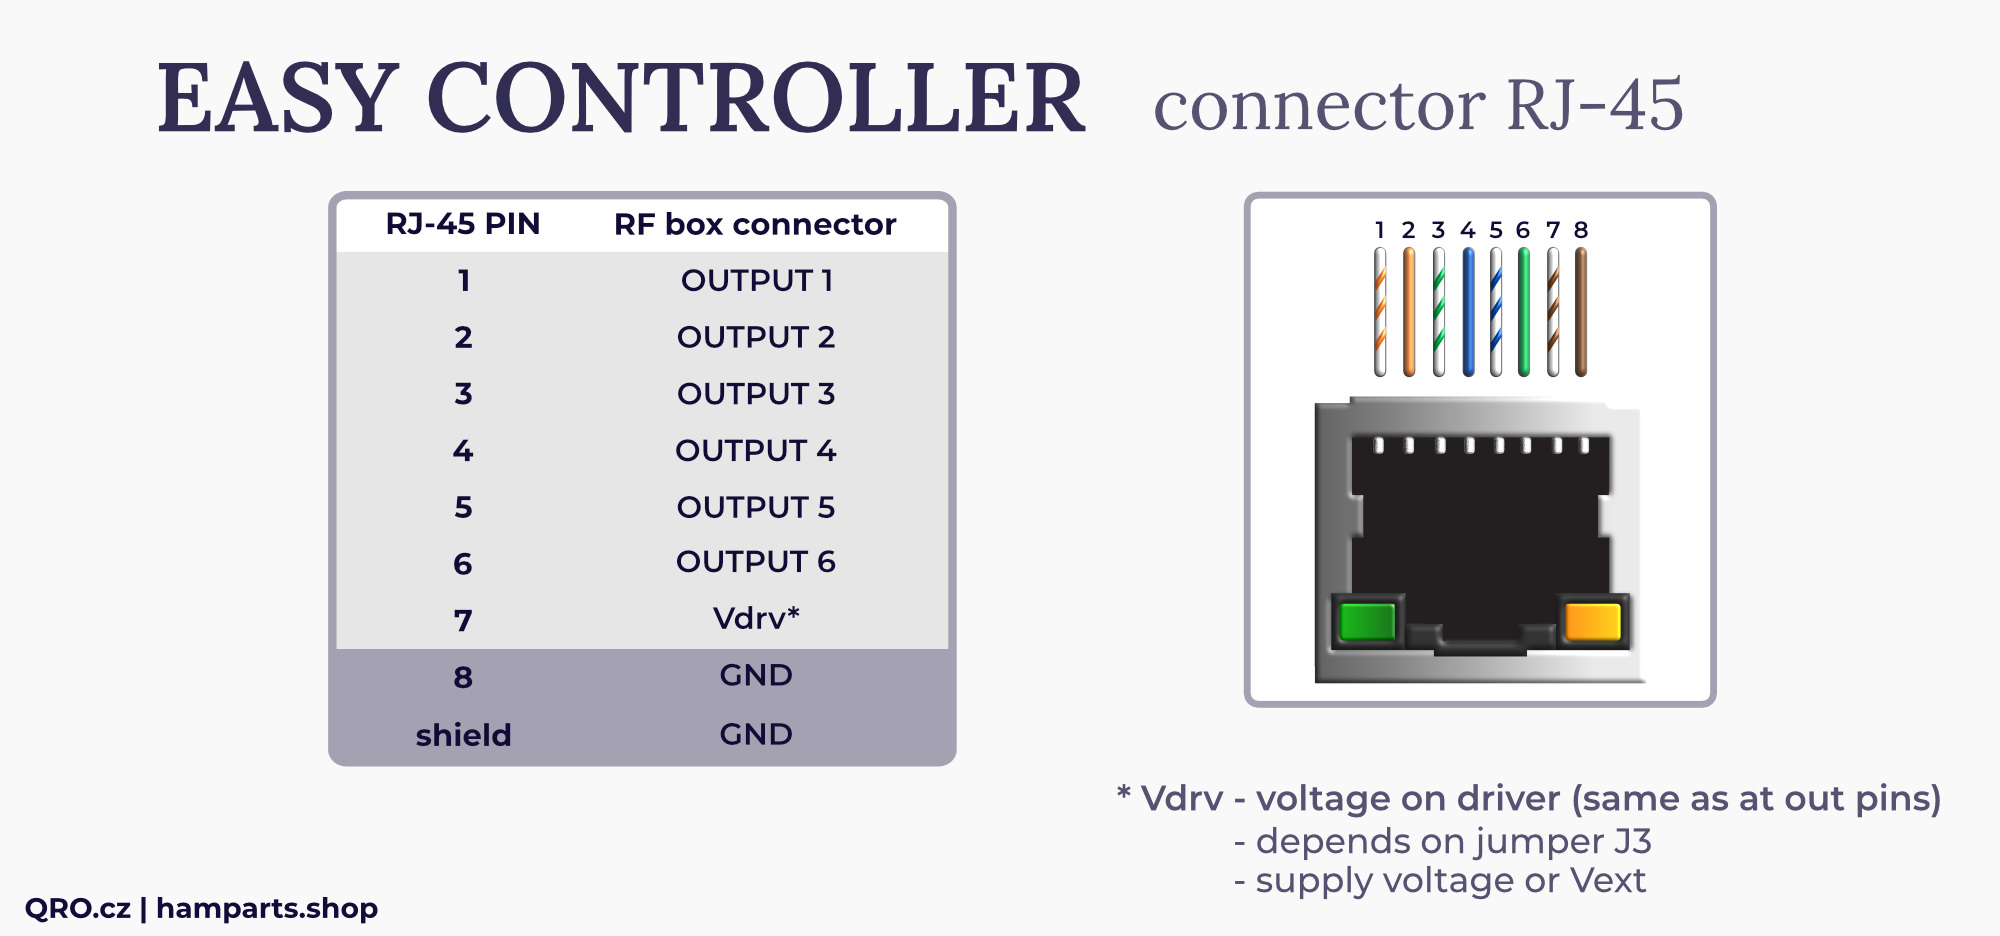 easy controller connector rj-45 qro.cz hamparts.shop